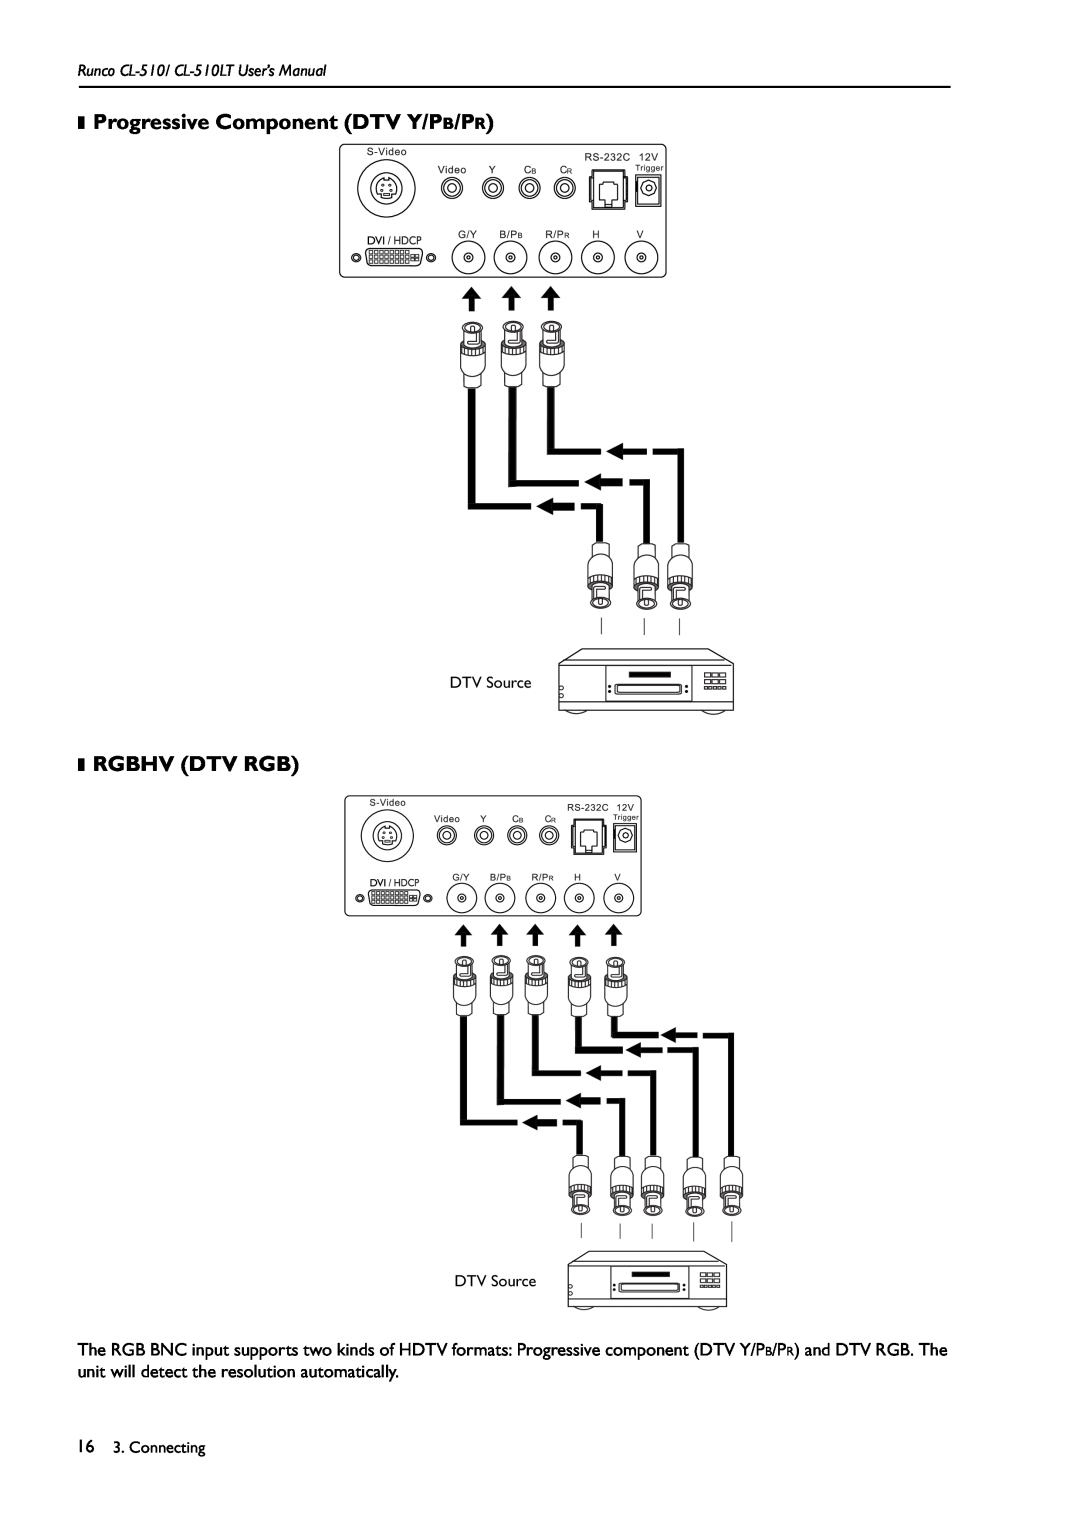 Runco CL-510LT manual Progressive Component DTV Y/PB/PR, Rgbhv Dtv Rgb, DTV Source, 16 3. Connecting 